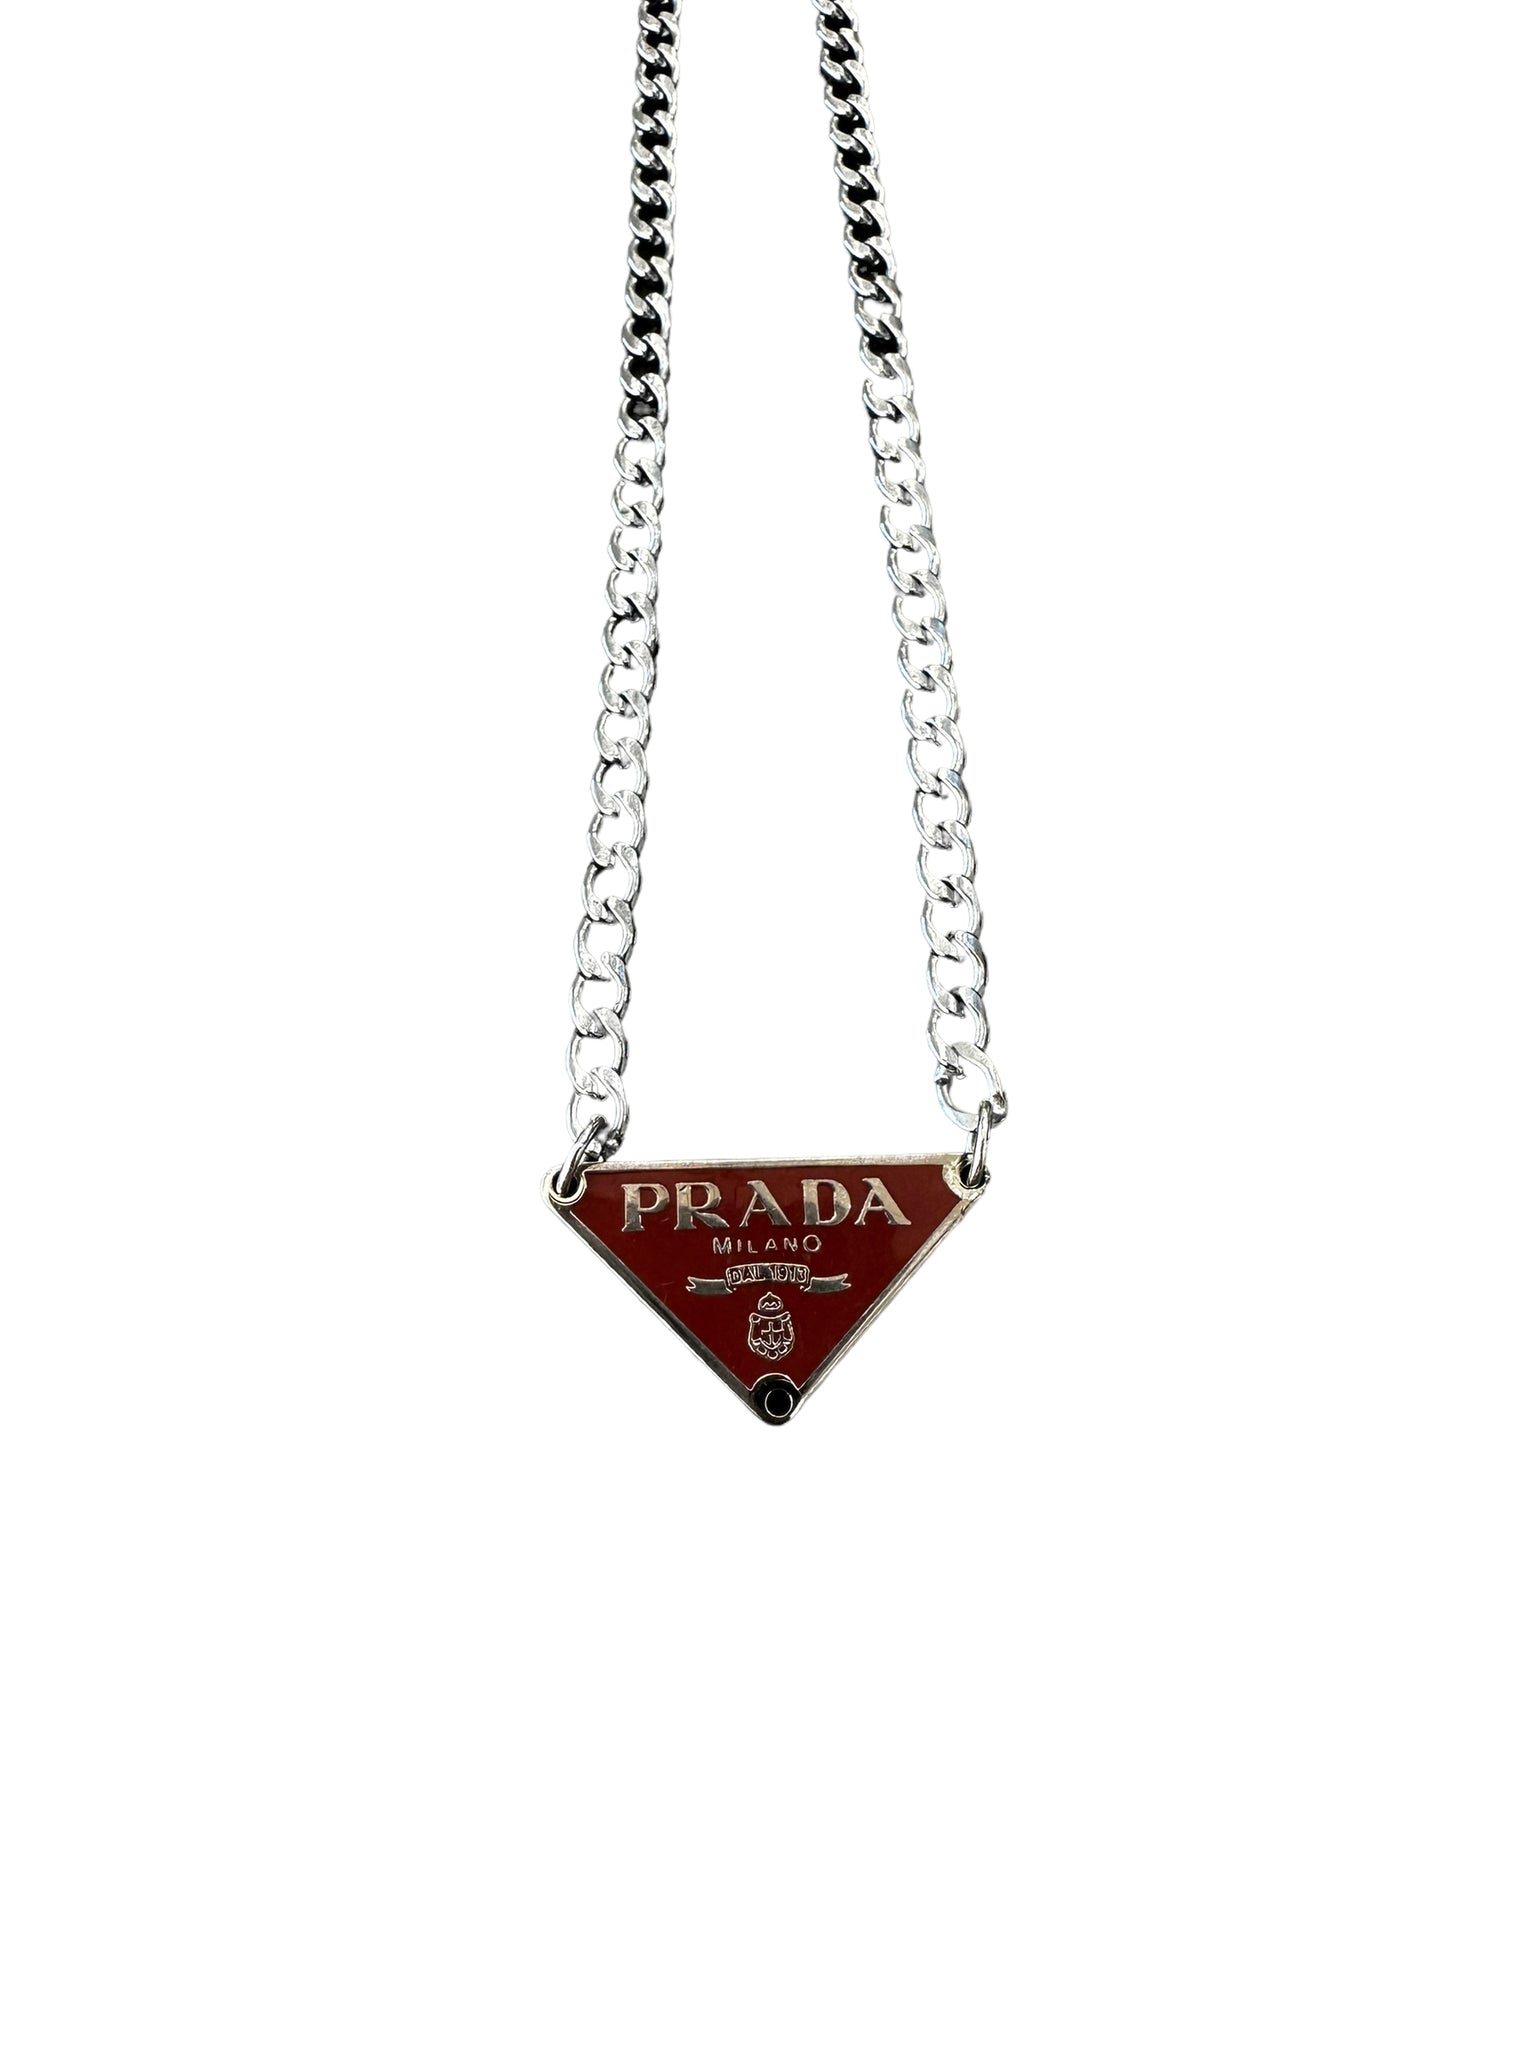 Upcycled Prada Necklace – The Bag Broker